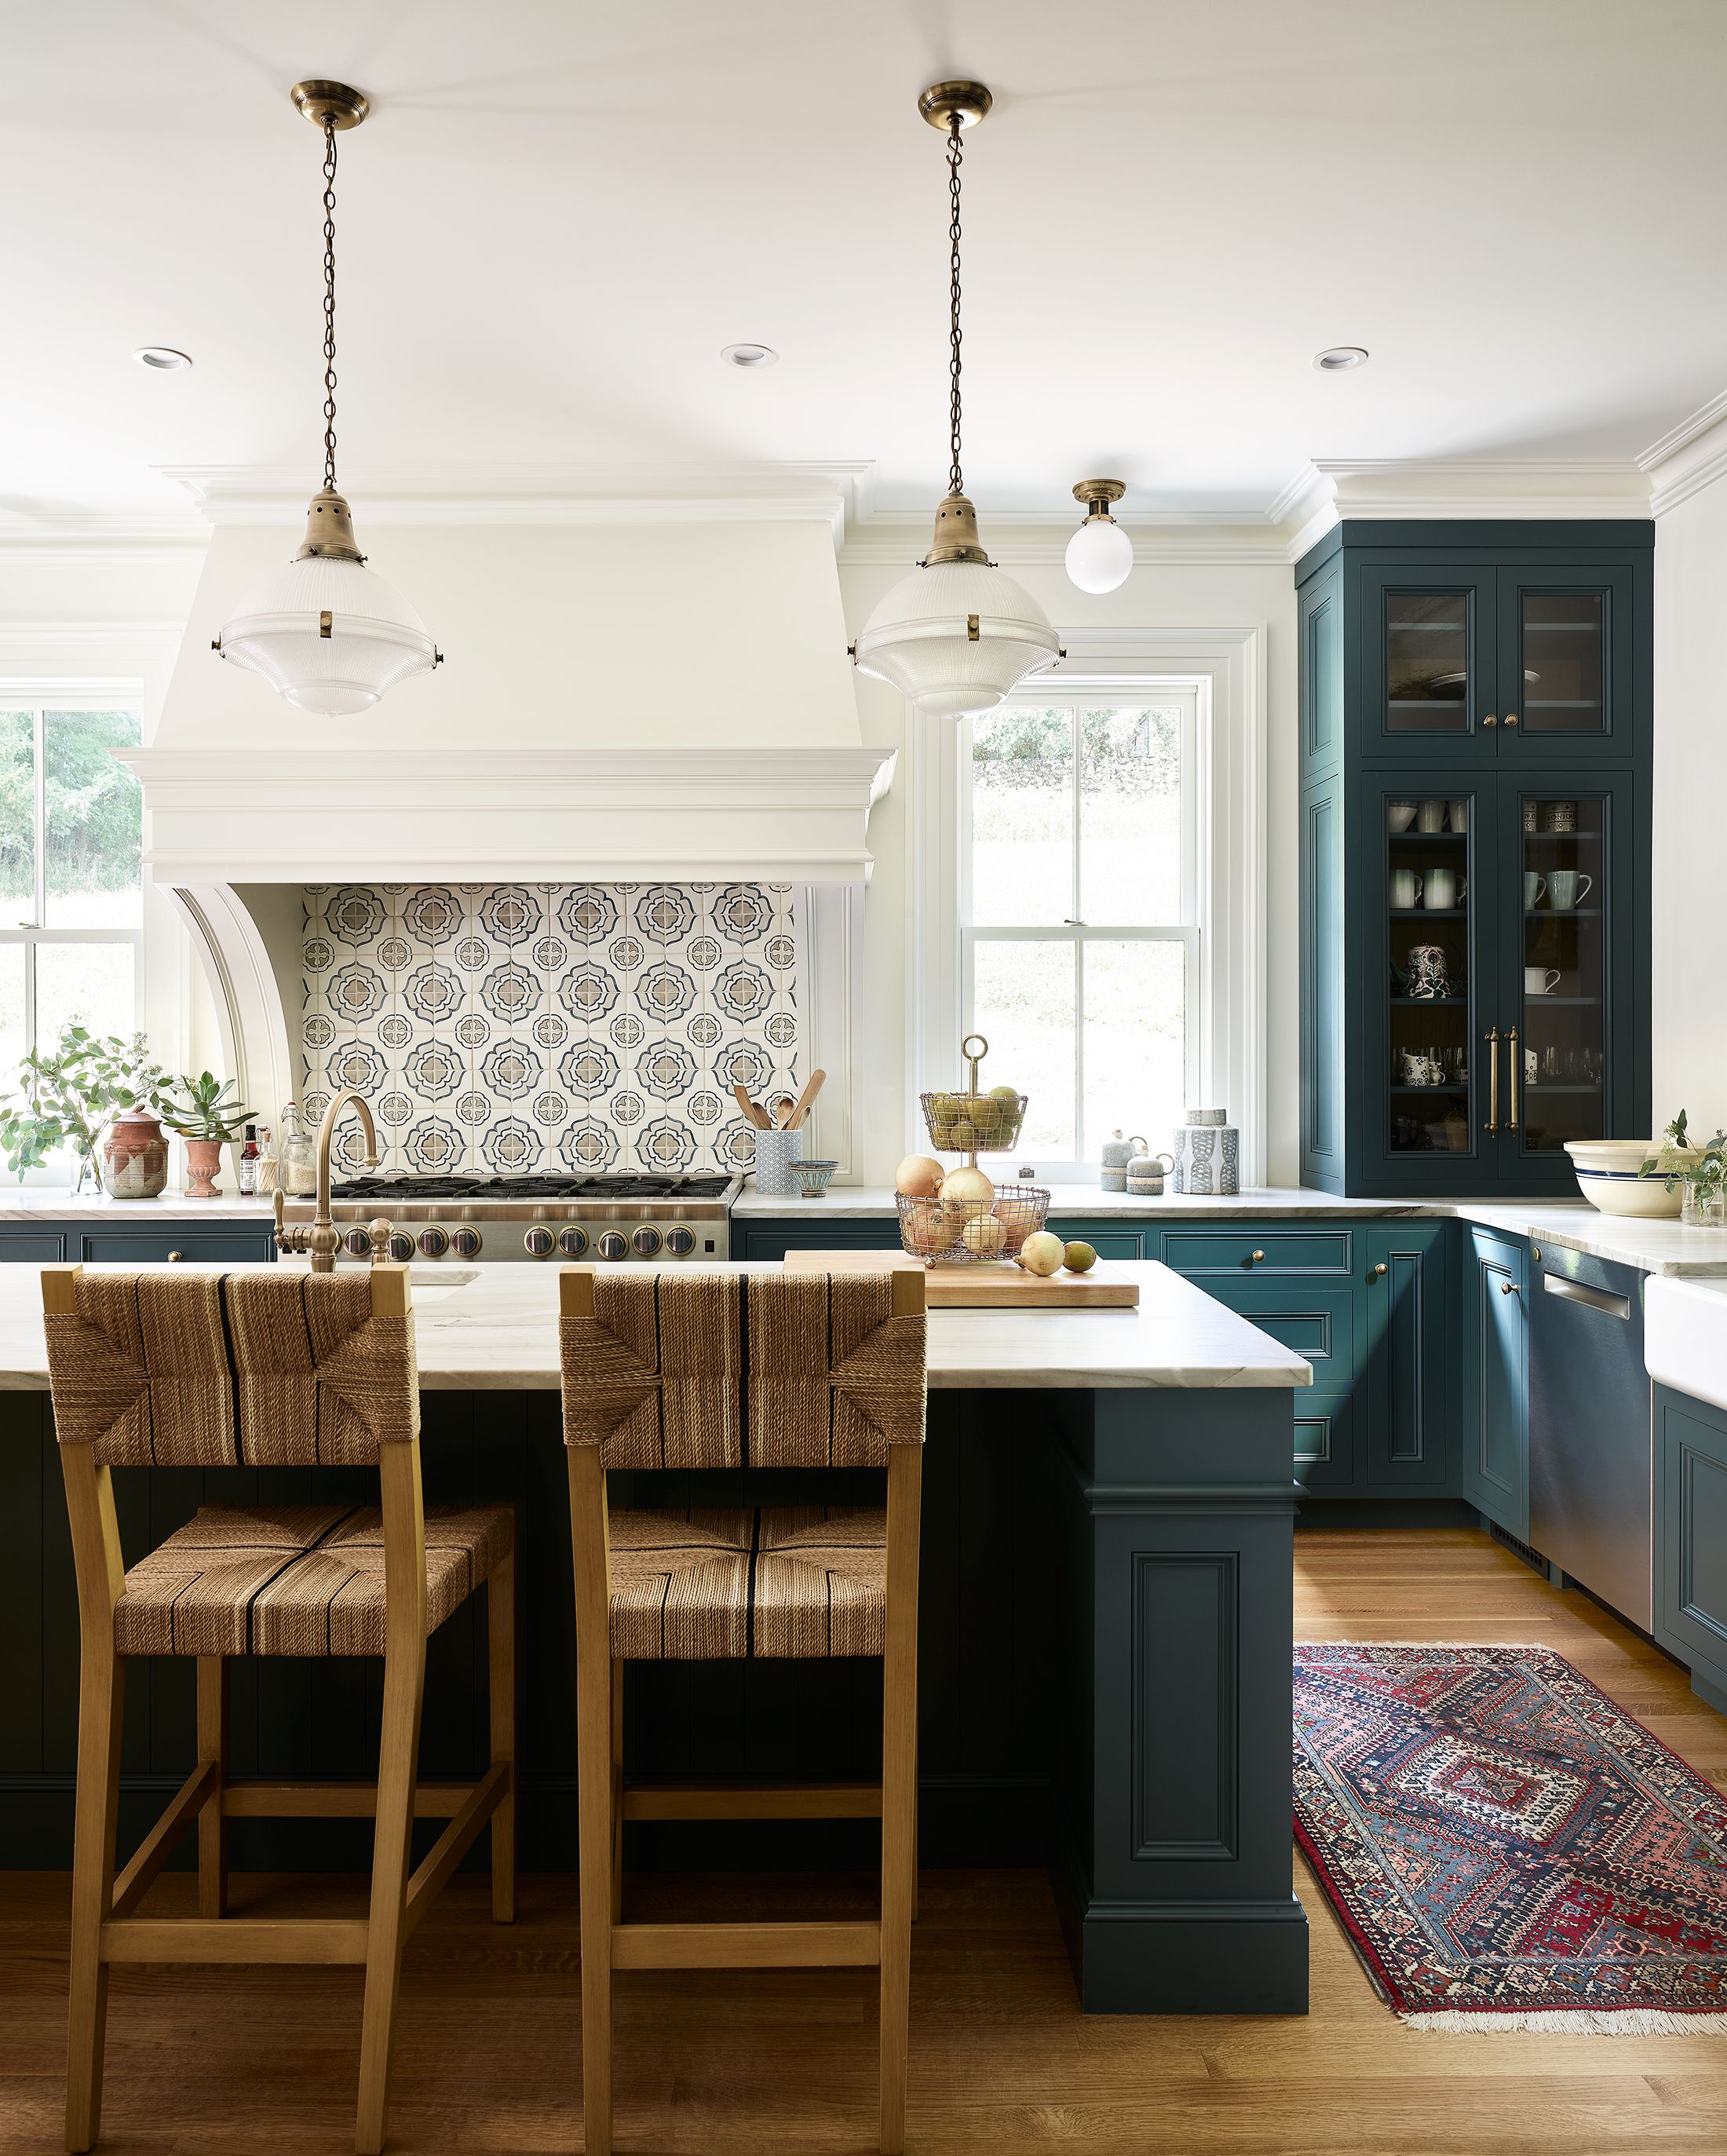 61 Kitchen Cabinet Design Ideas 2022, Kitchen Cabinets Pictures Gallery 2021